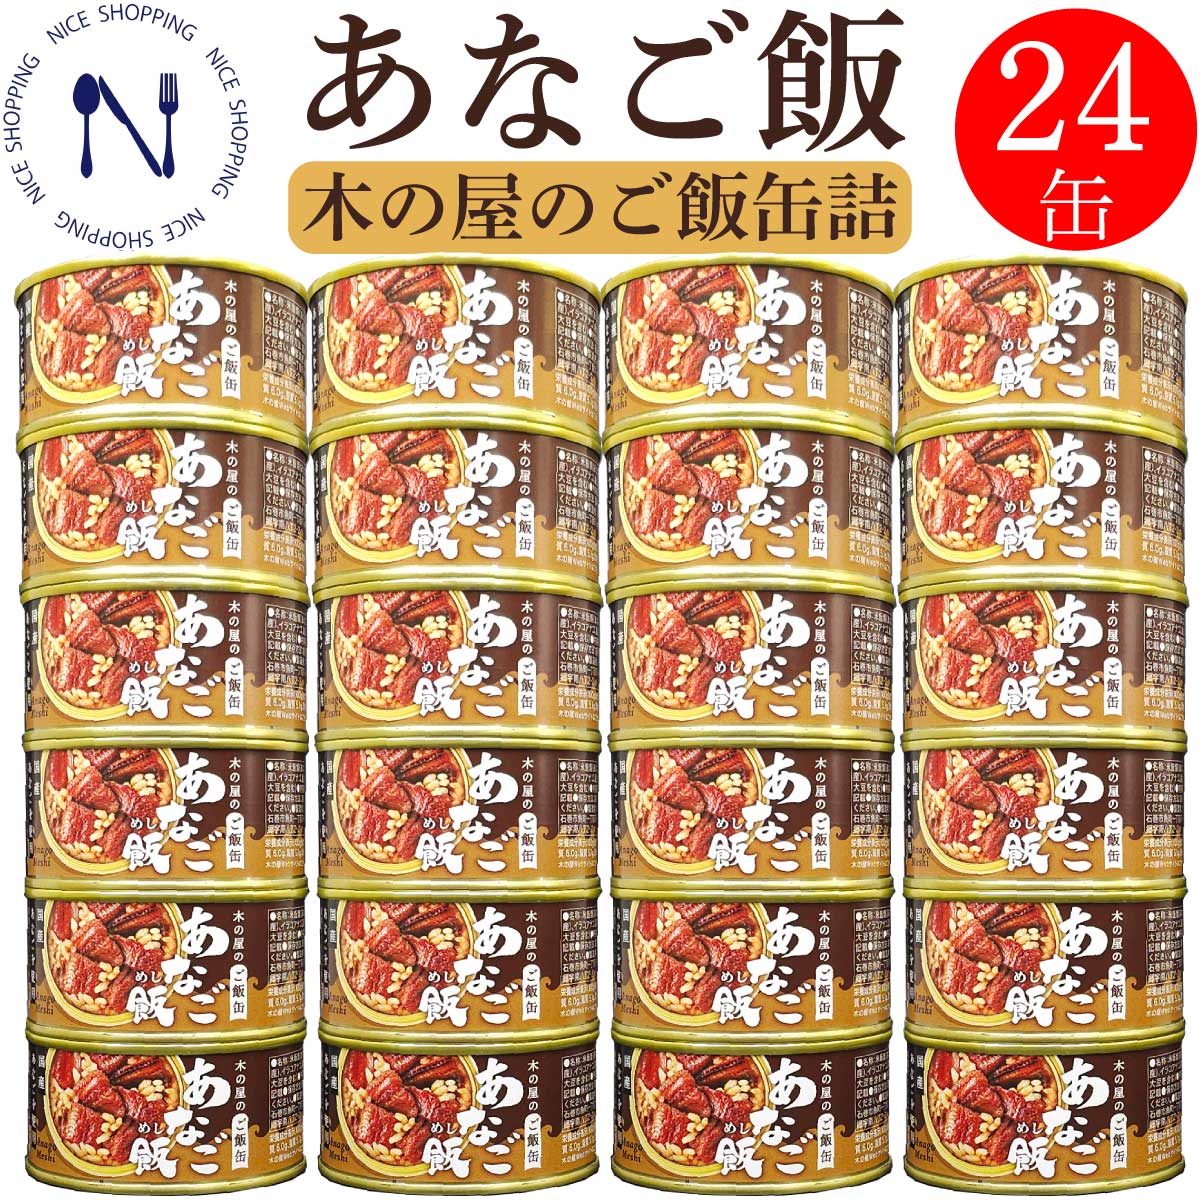 【新発売】木の屋 石巻水産 缶詰 備